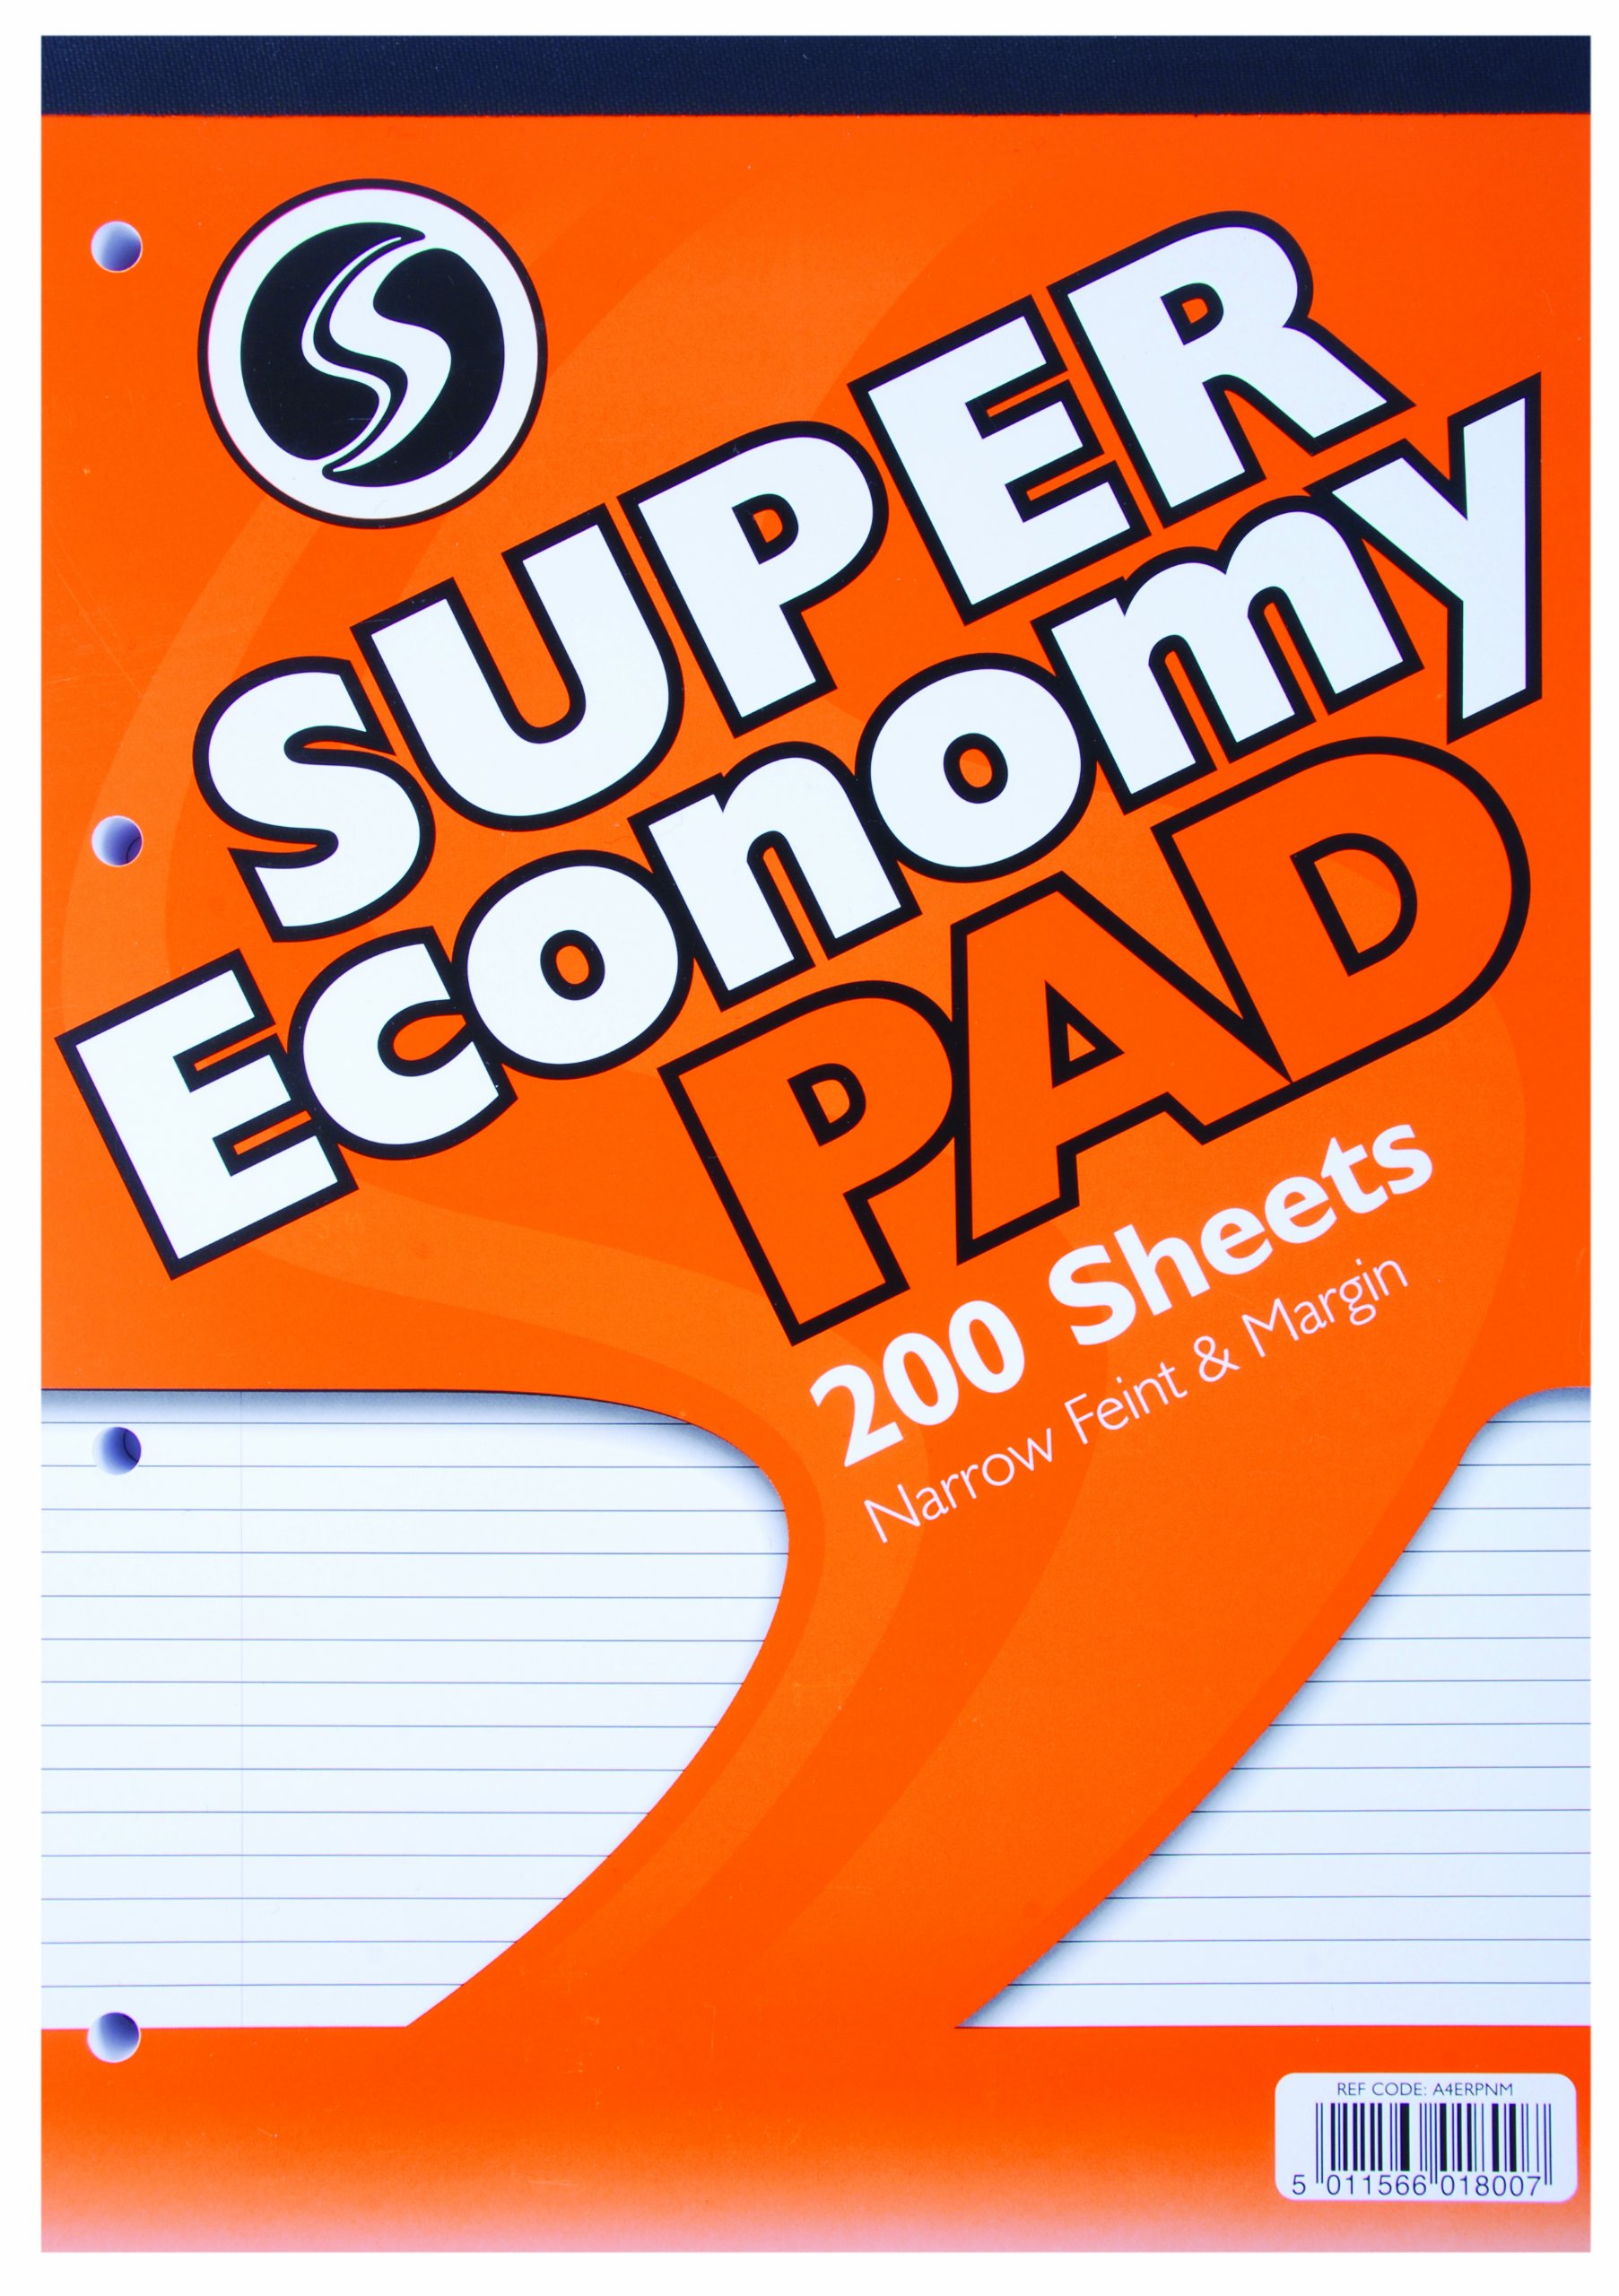 A4 Super Econ Refill Pad, 400 pages, N. Feint & Margin (Orange cover)